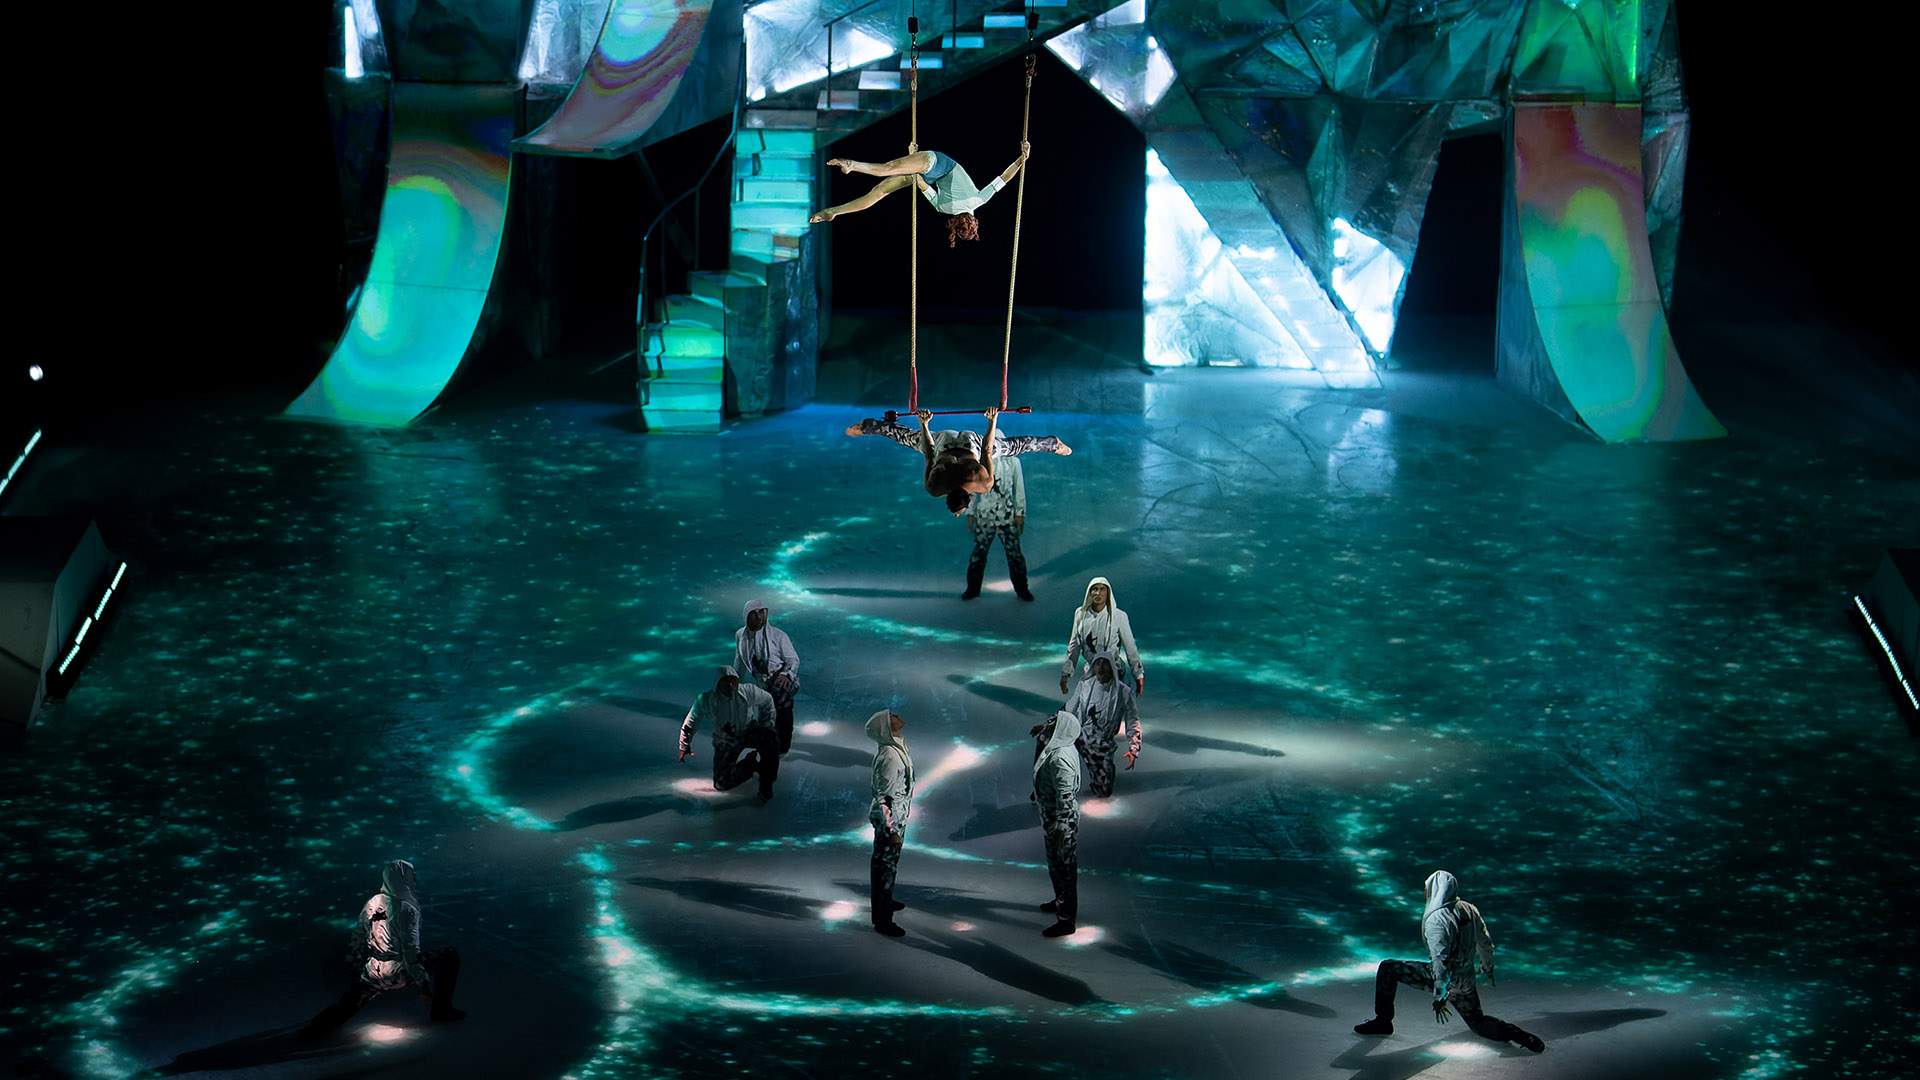 CRYSTAL — Cirque du Soleil